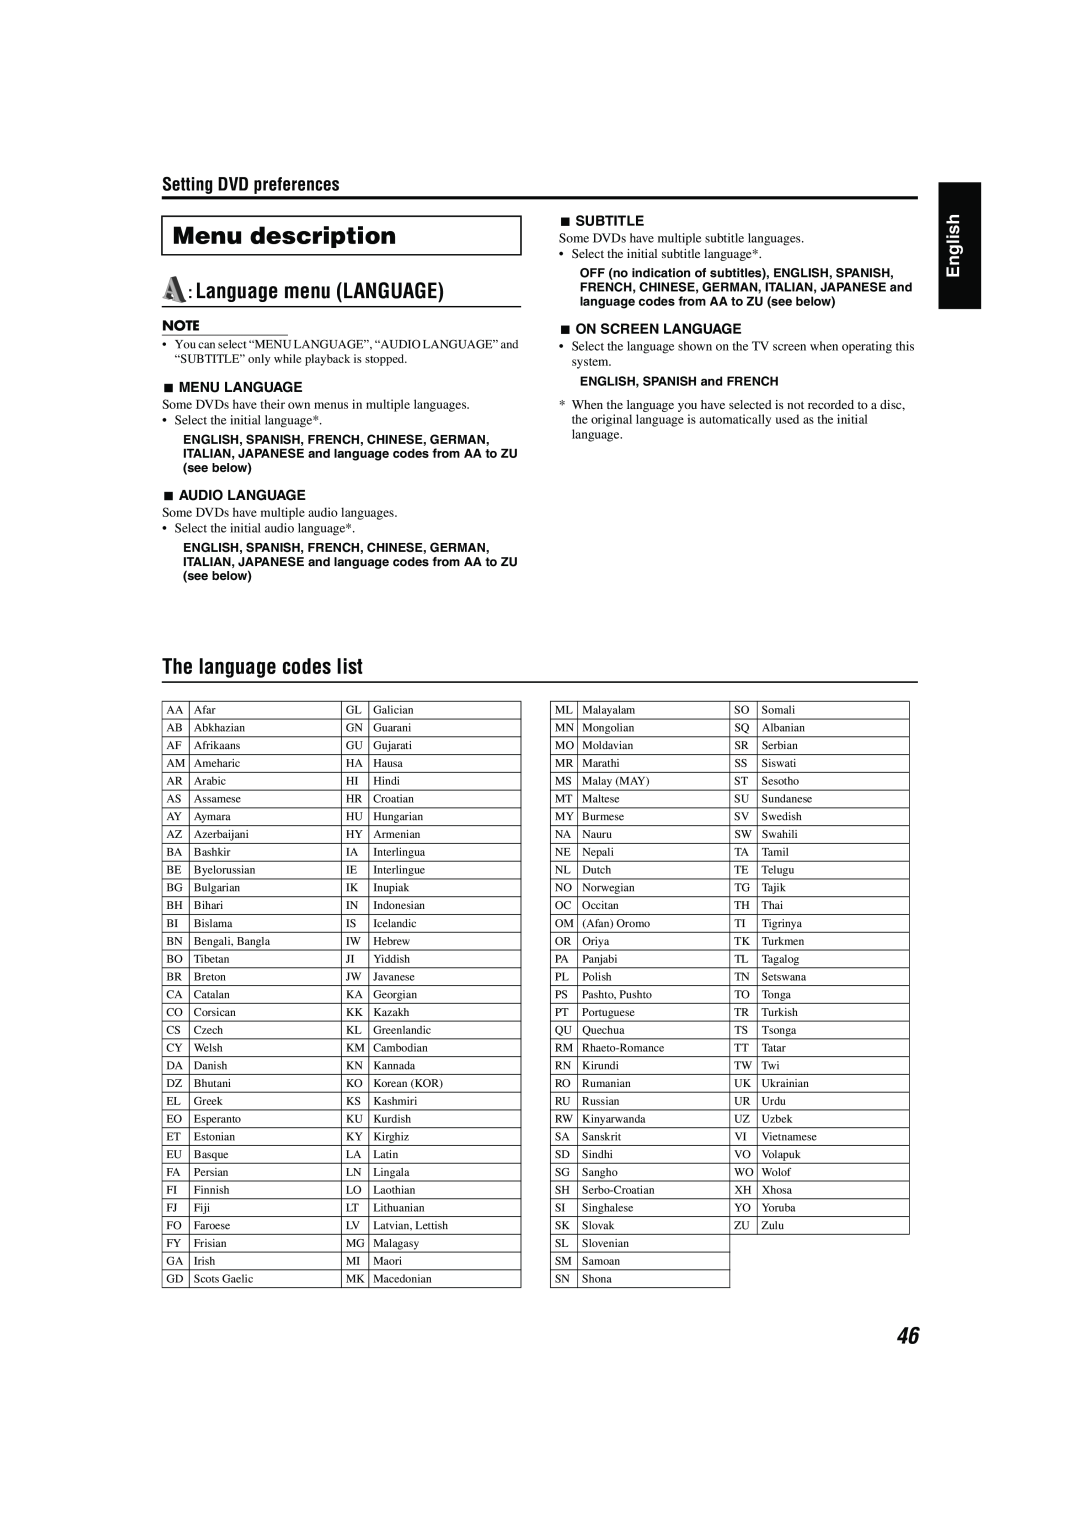 JVC TH-M42 manual Menu description, Language menu LANGUAGE, The language codes list, Setting DVD preferences, English 